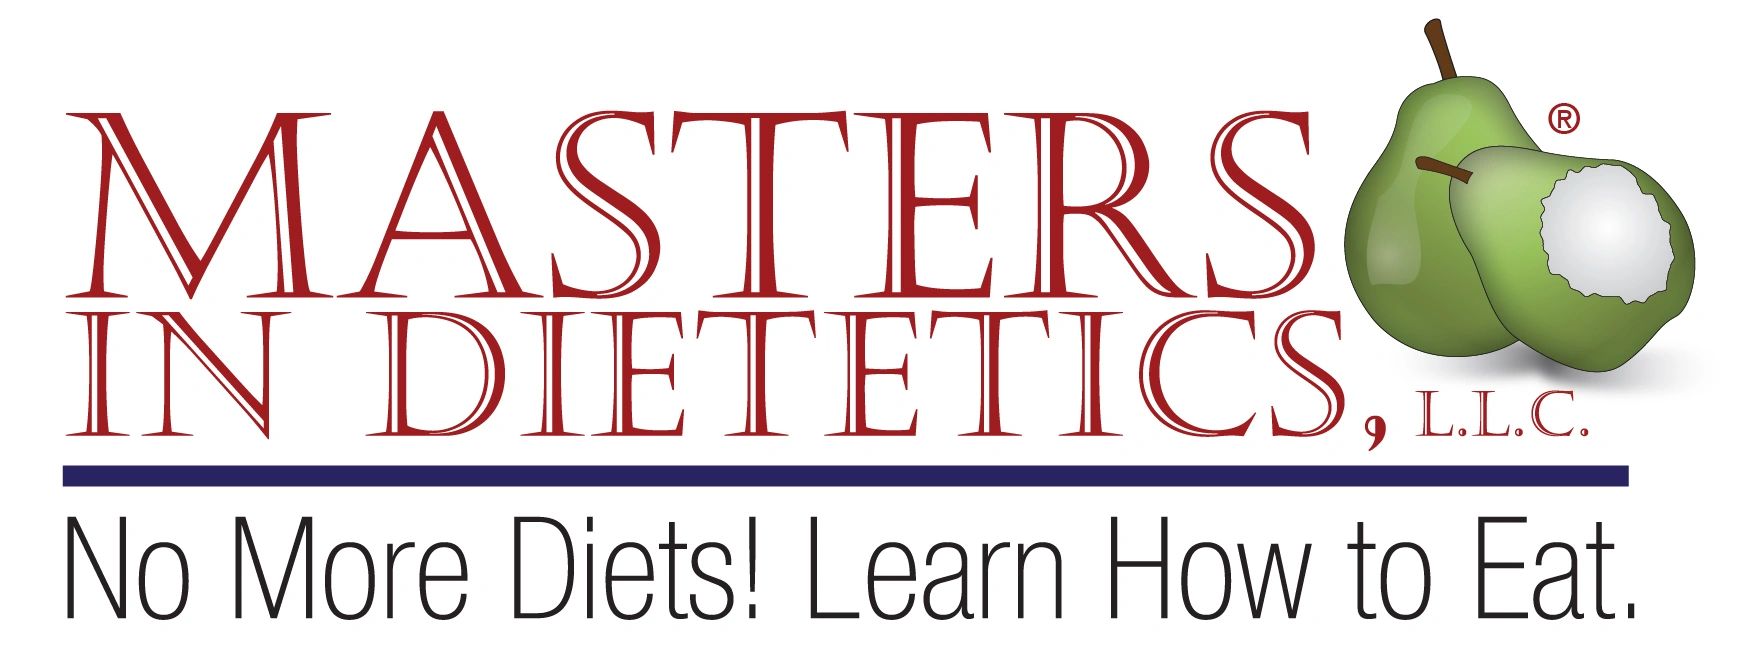 Masters In Dietetics, LLC Logo Nutrition Diets Eat Healthy